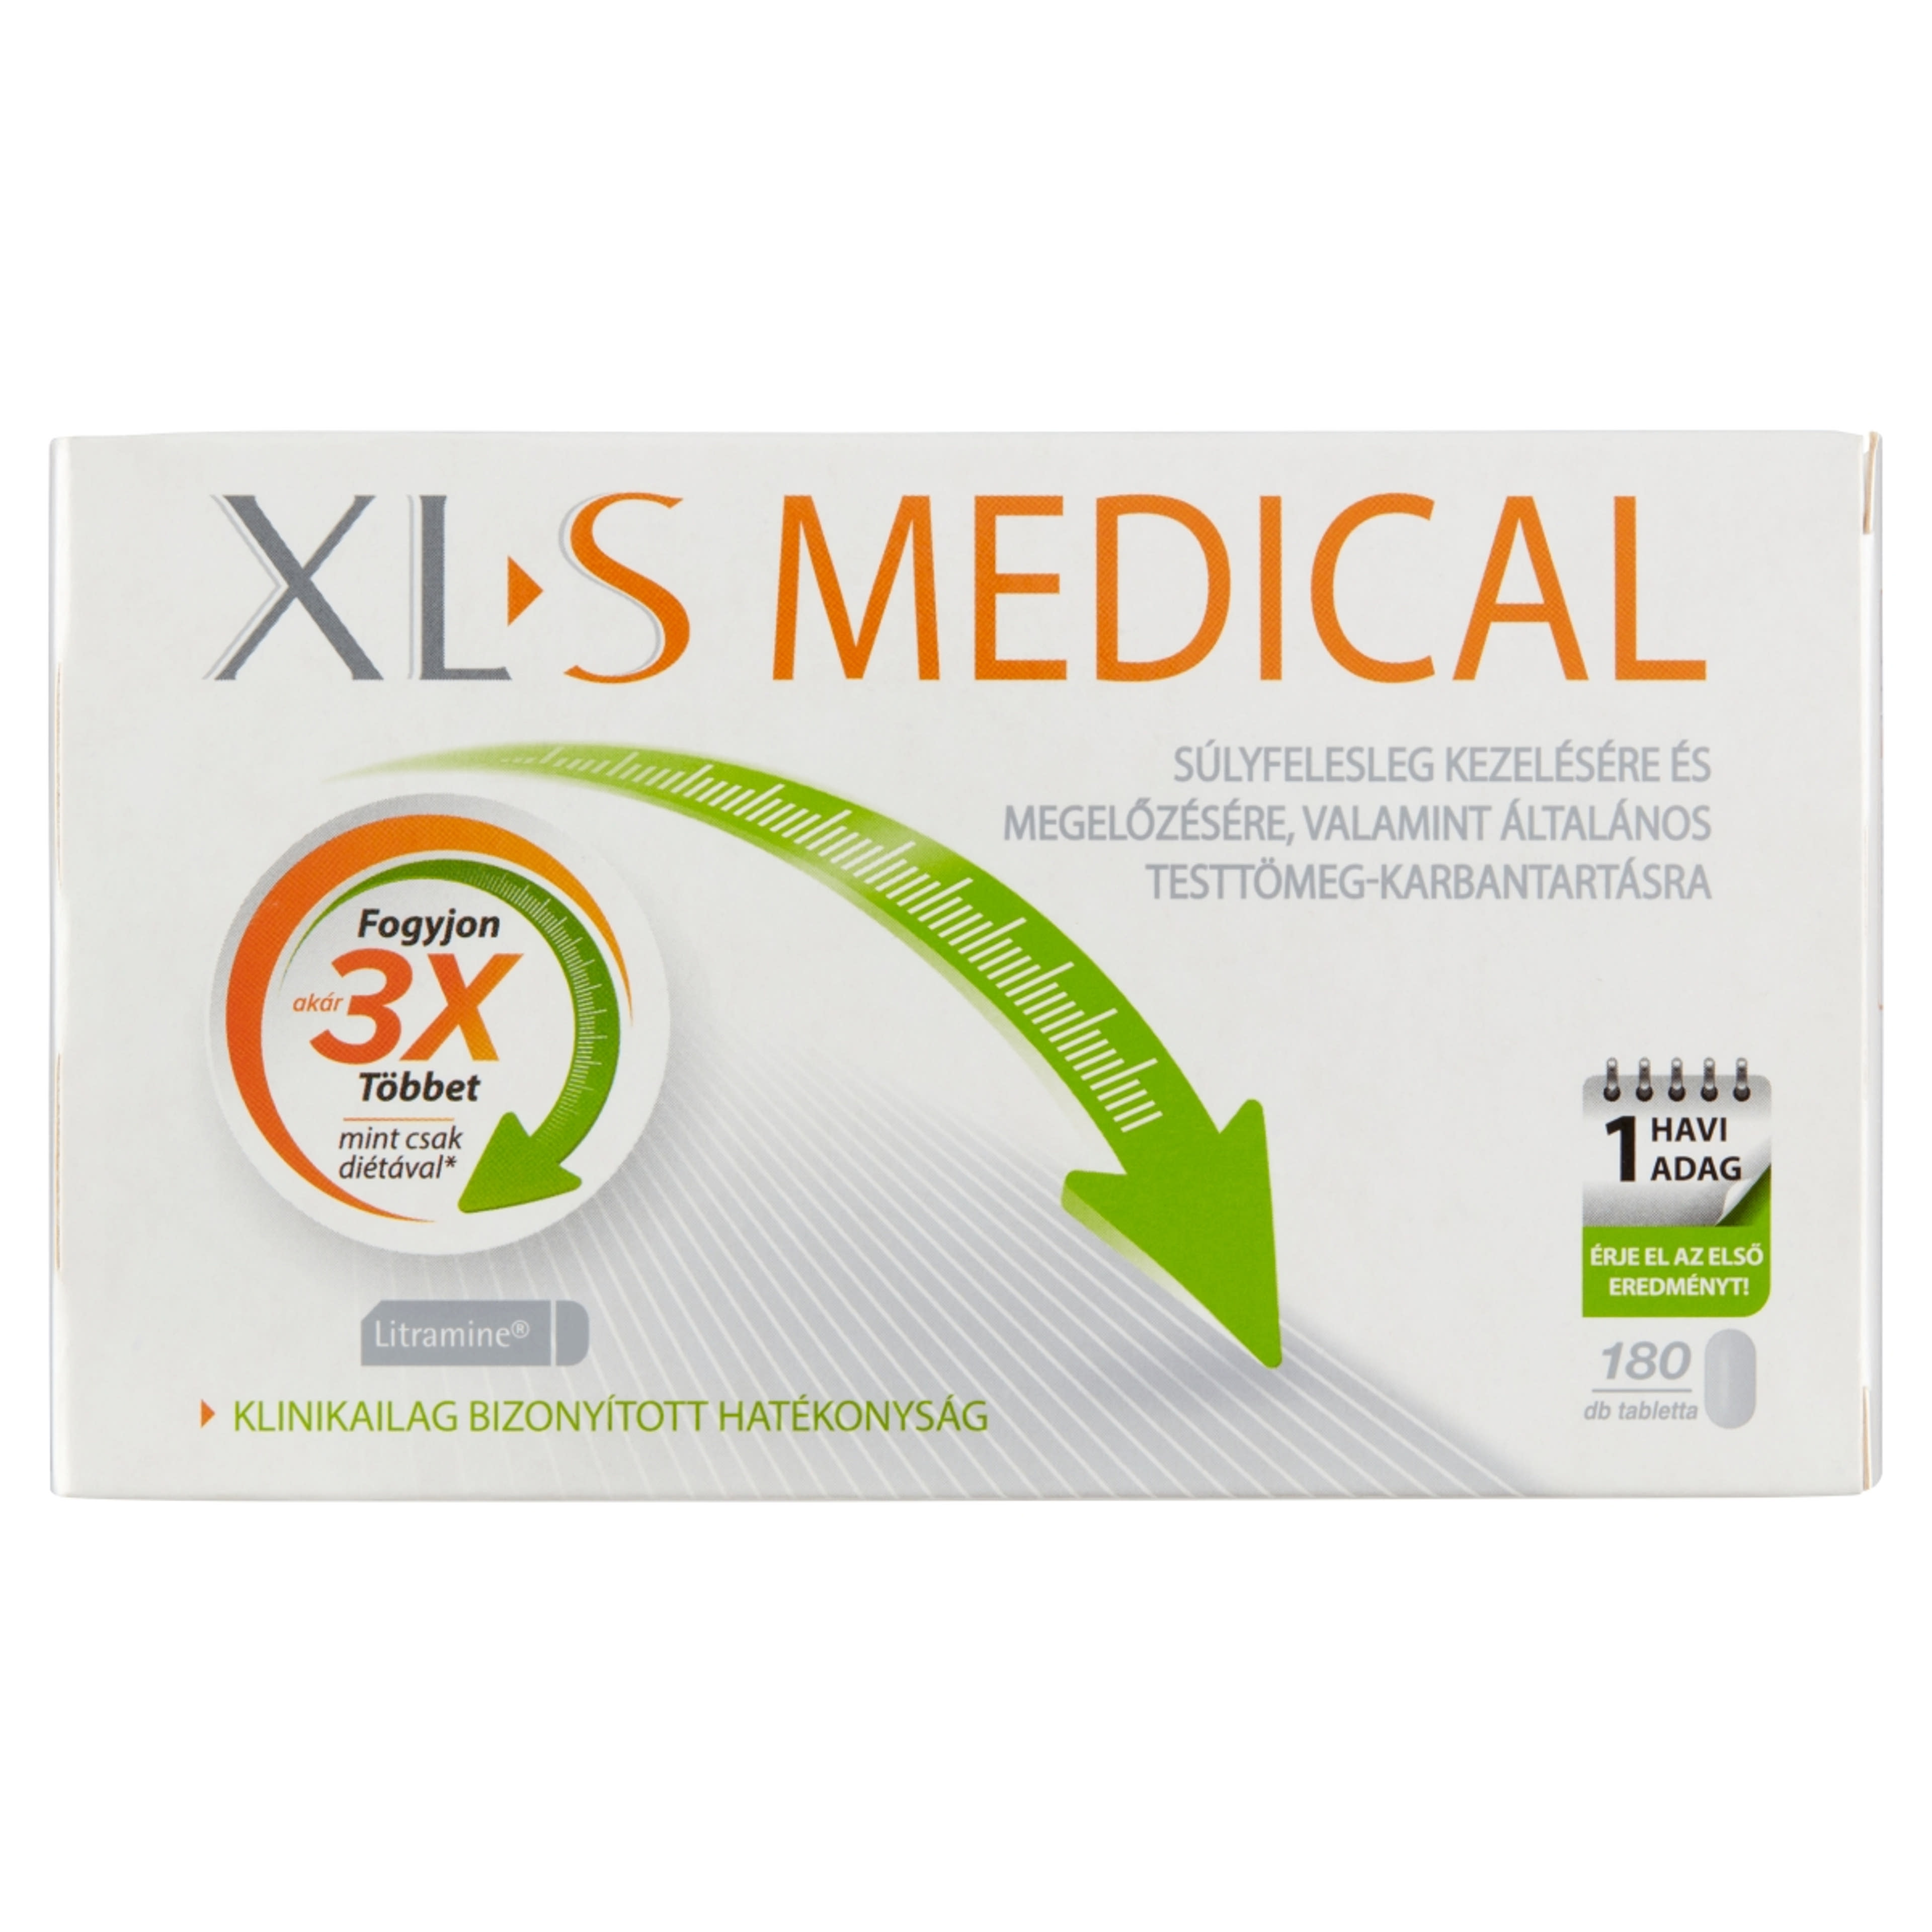 XLS Medical Tabletta - 180 db-1